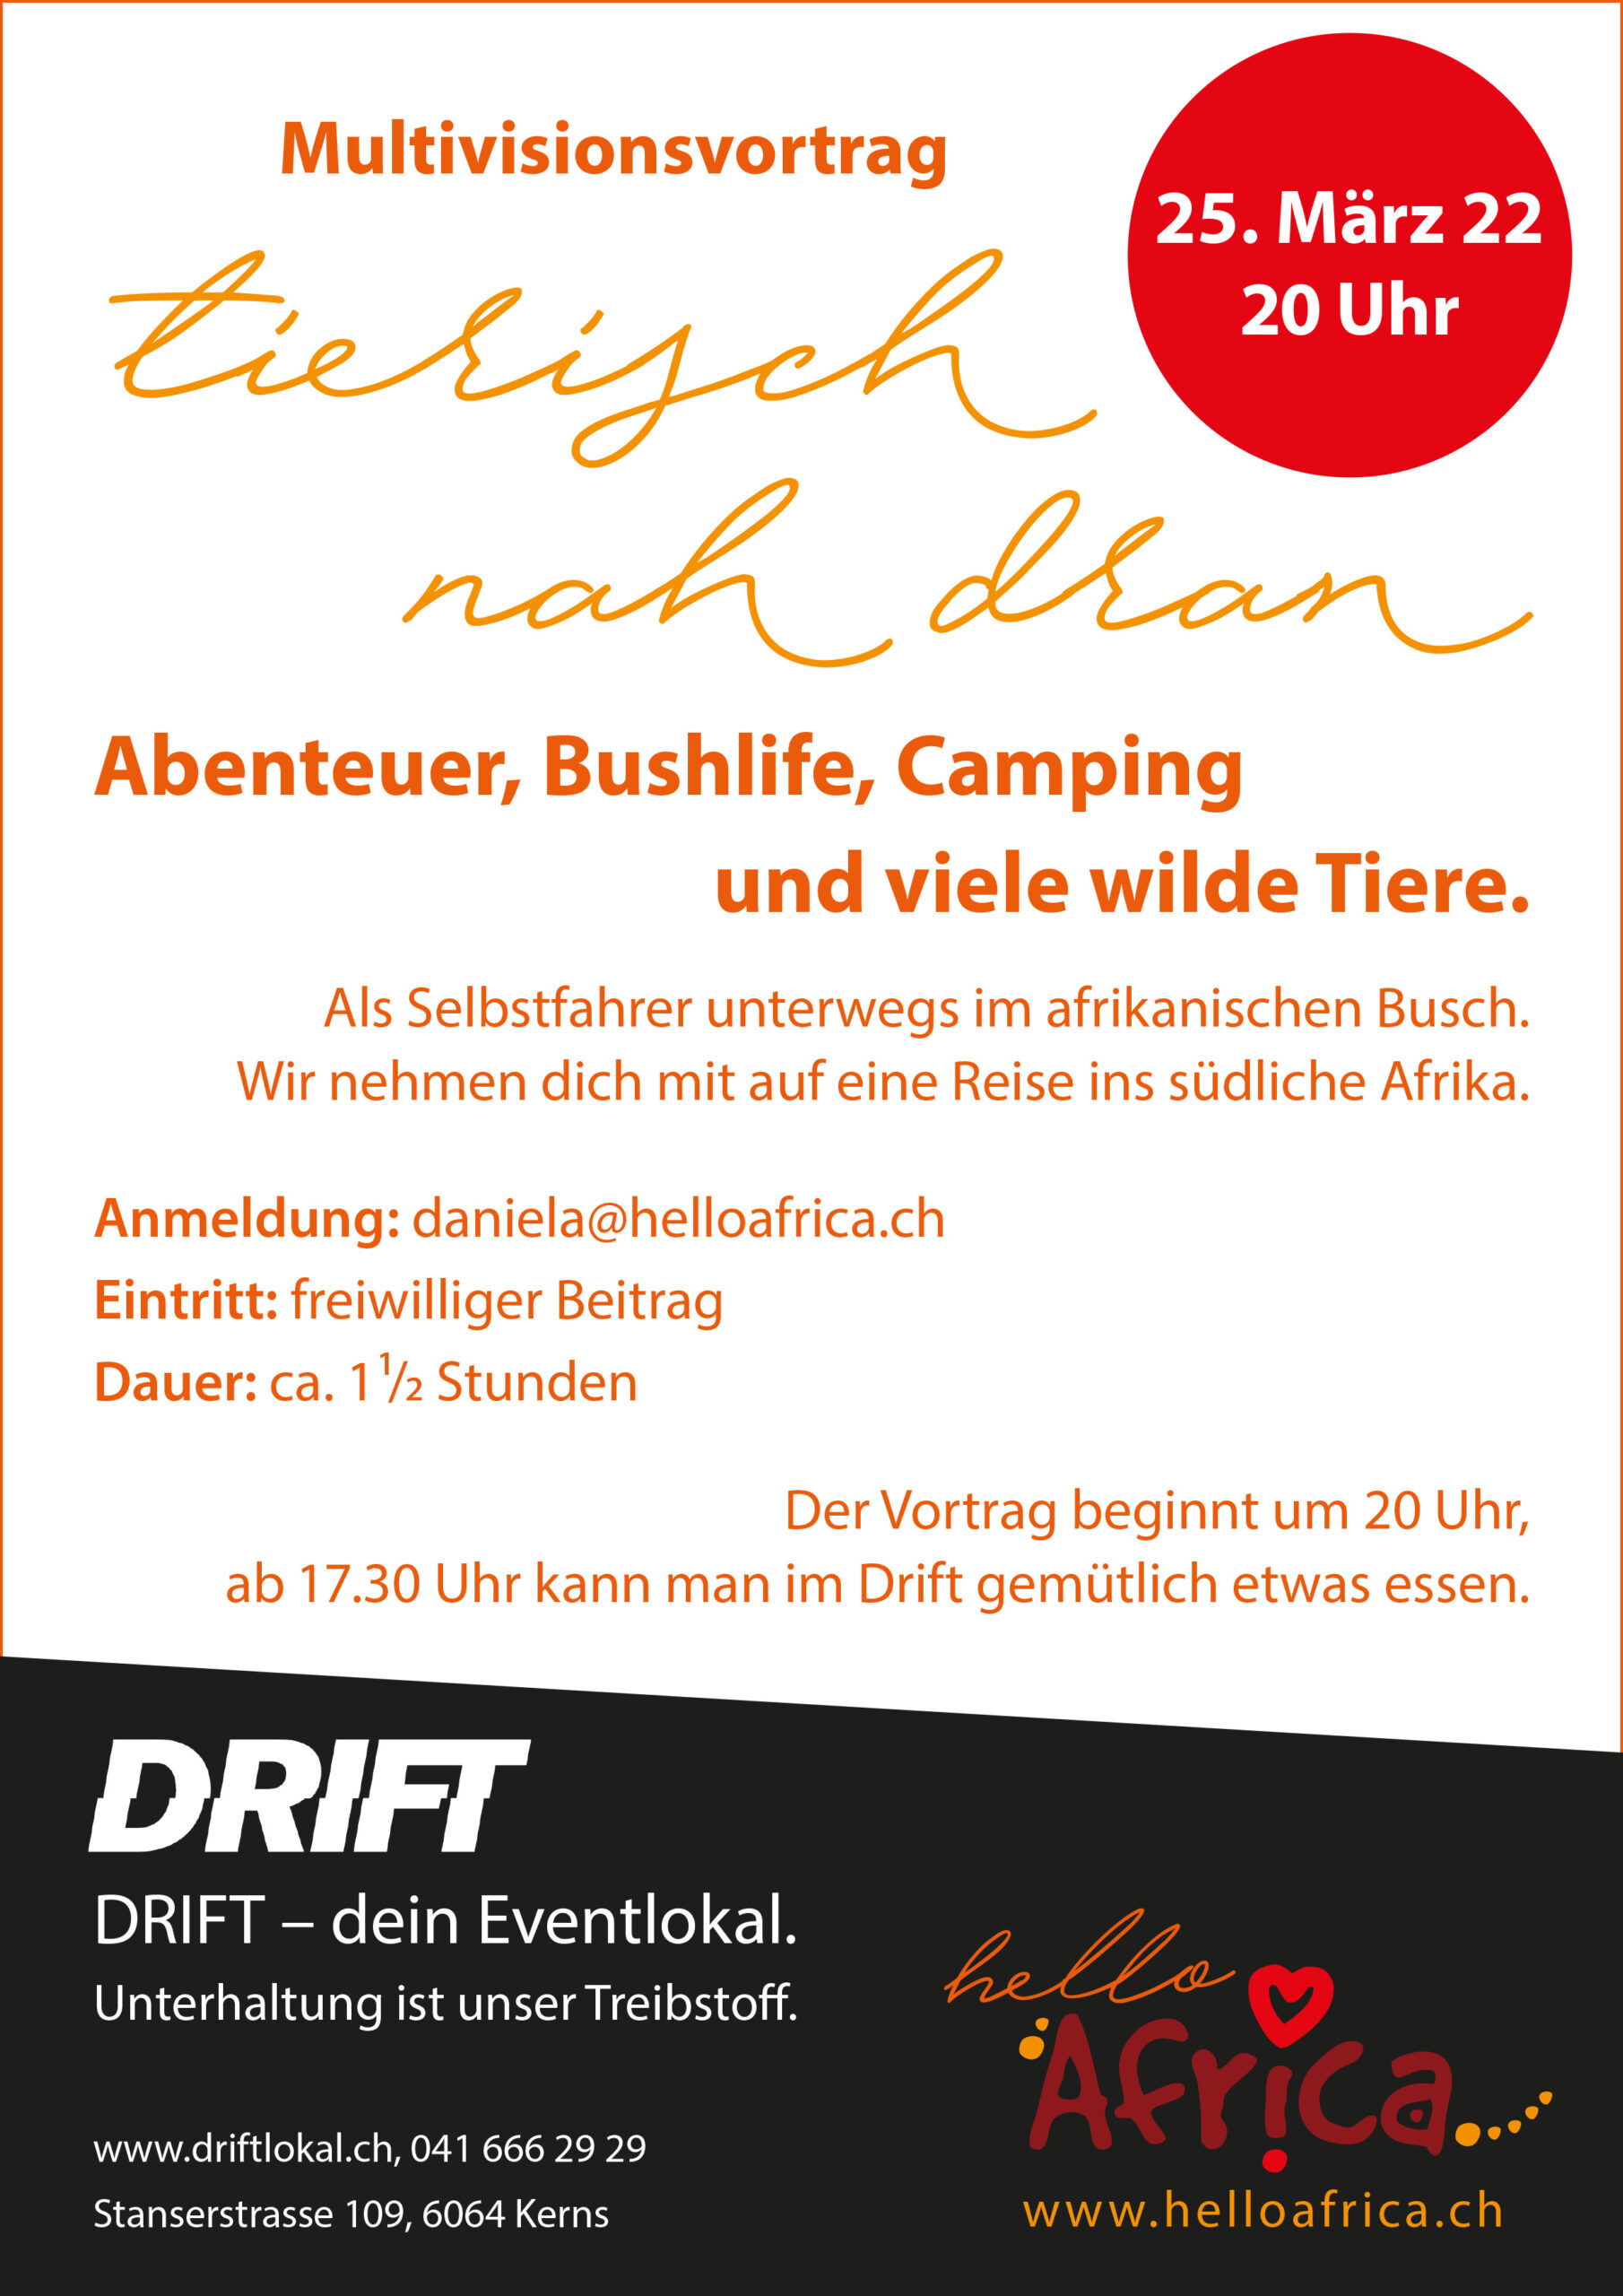 Flyer_Vortrag_Drift.indd